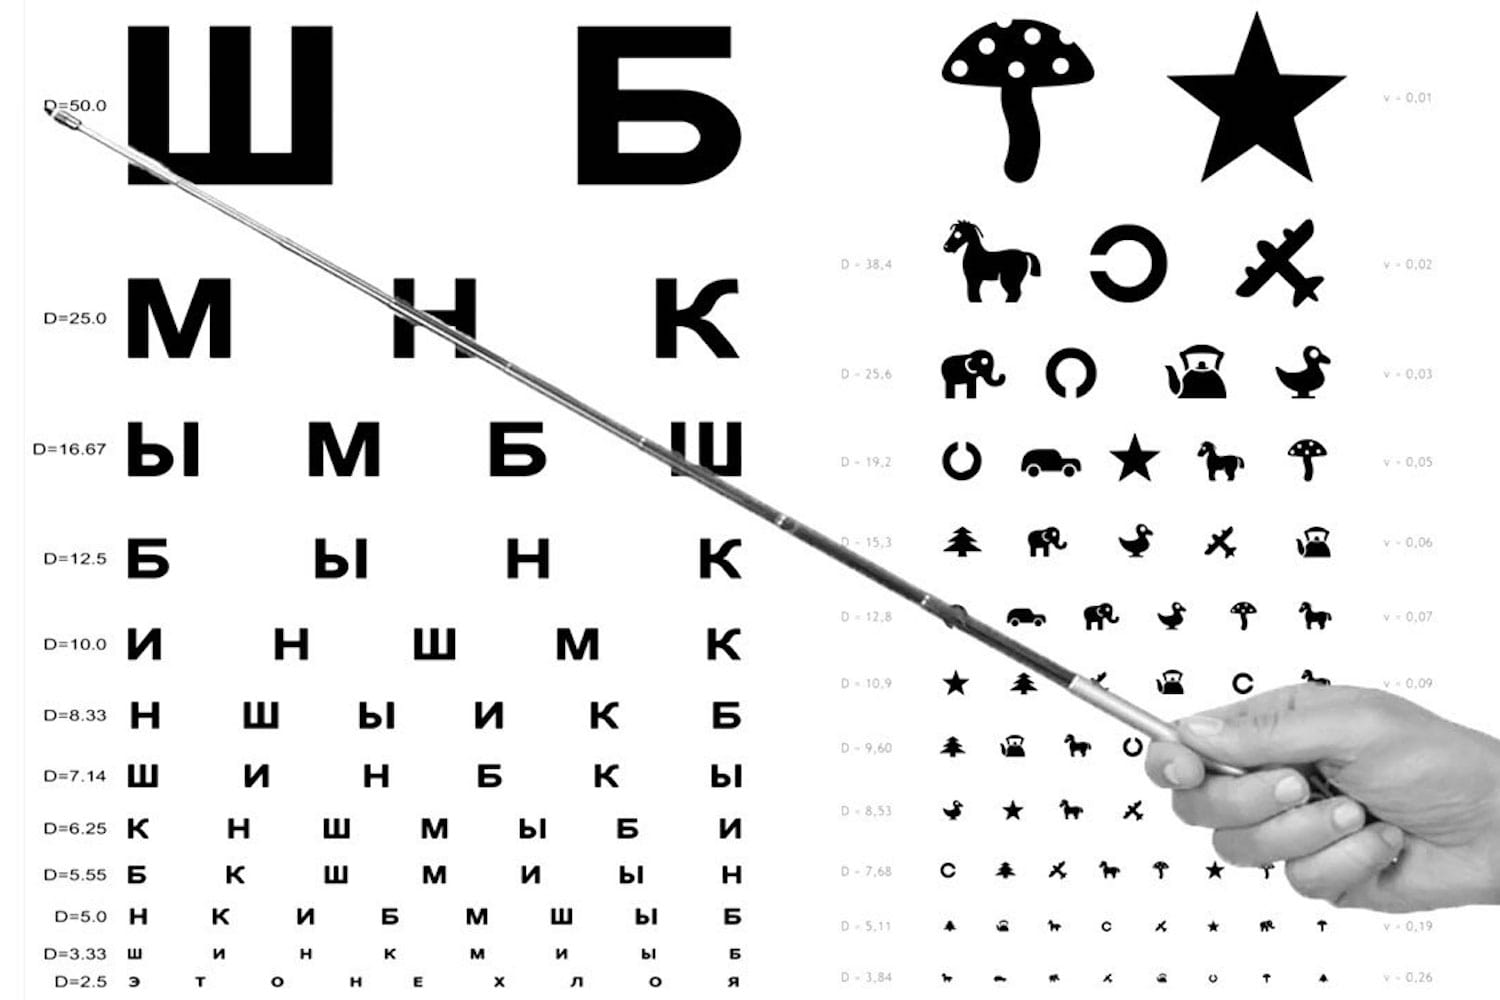 Оценка остроты зрения по таблице Сивцева-Головина